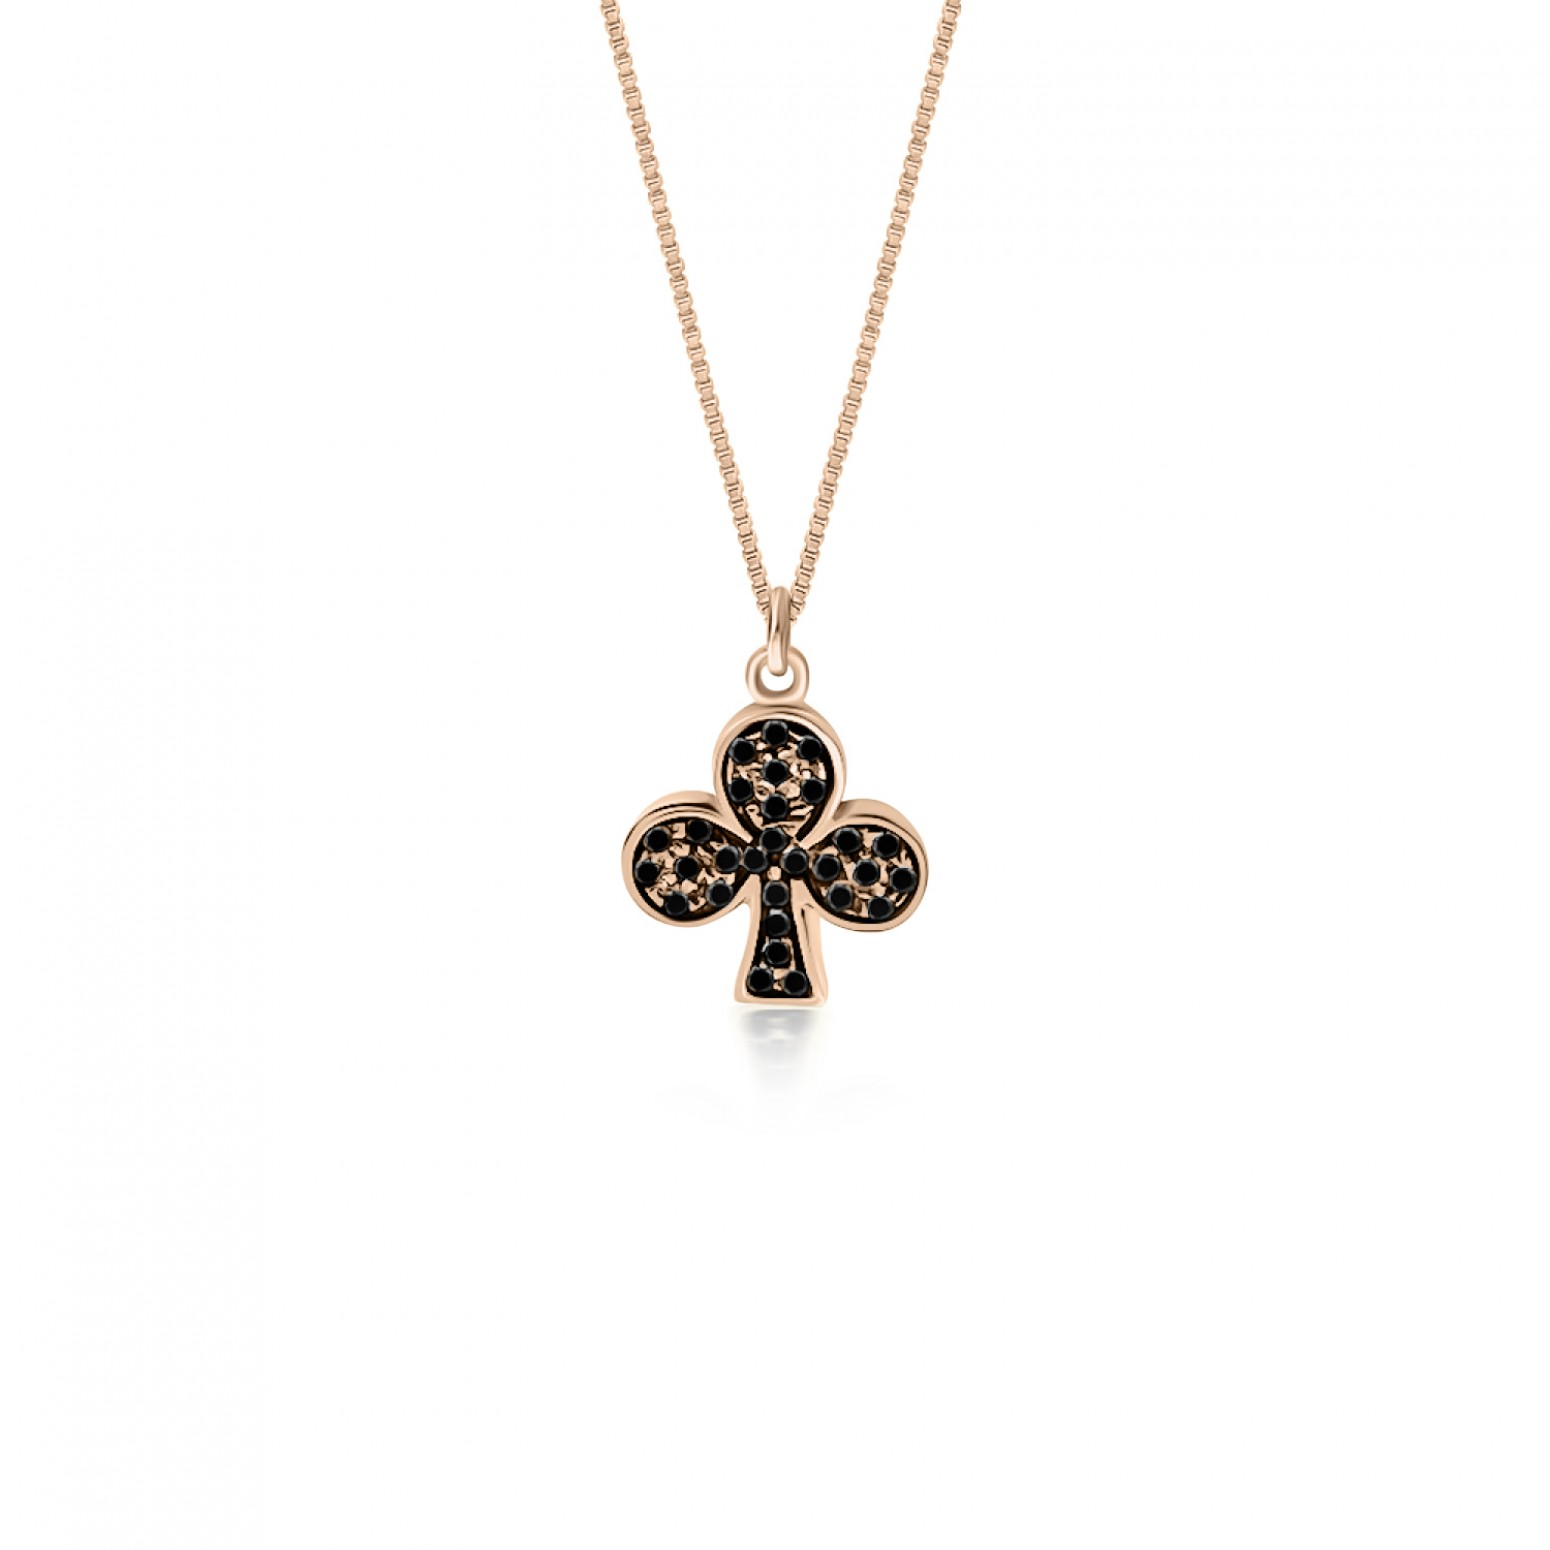 Clover necklace, Κ14 pink gold with black zircon, ko1864 NECKLACES Κοσμηματα - chrilia.gr